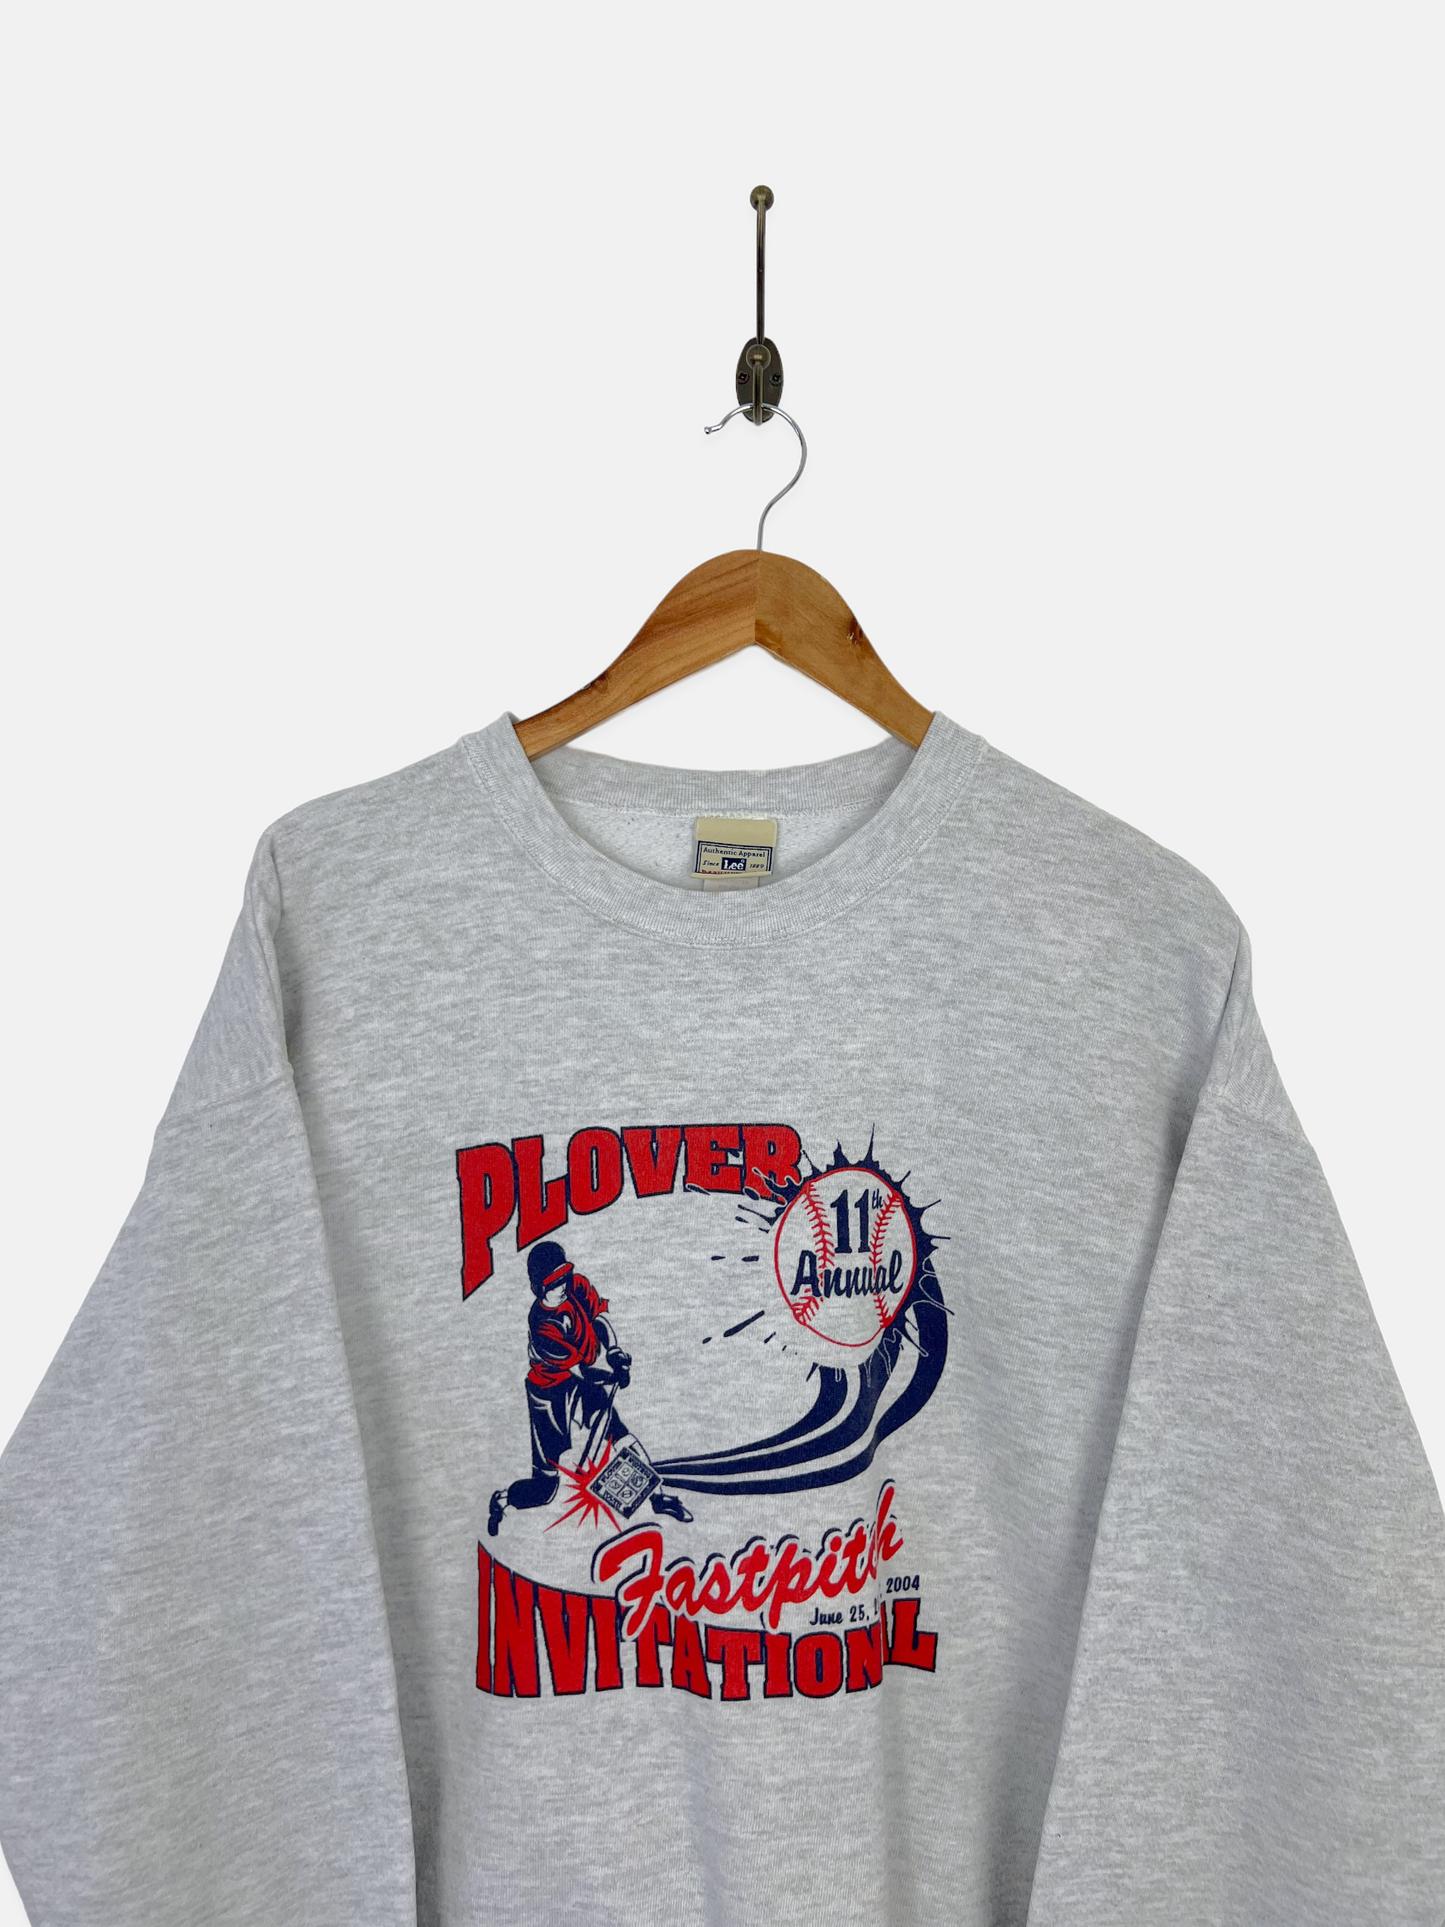 Plover Invitational Fastpitch Vintage Sweatshirt Size M-L